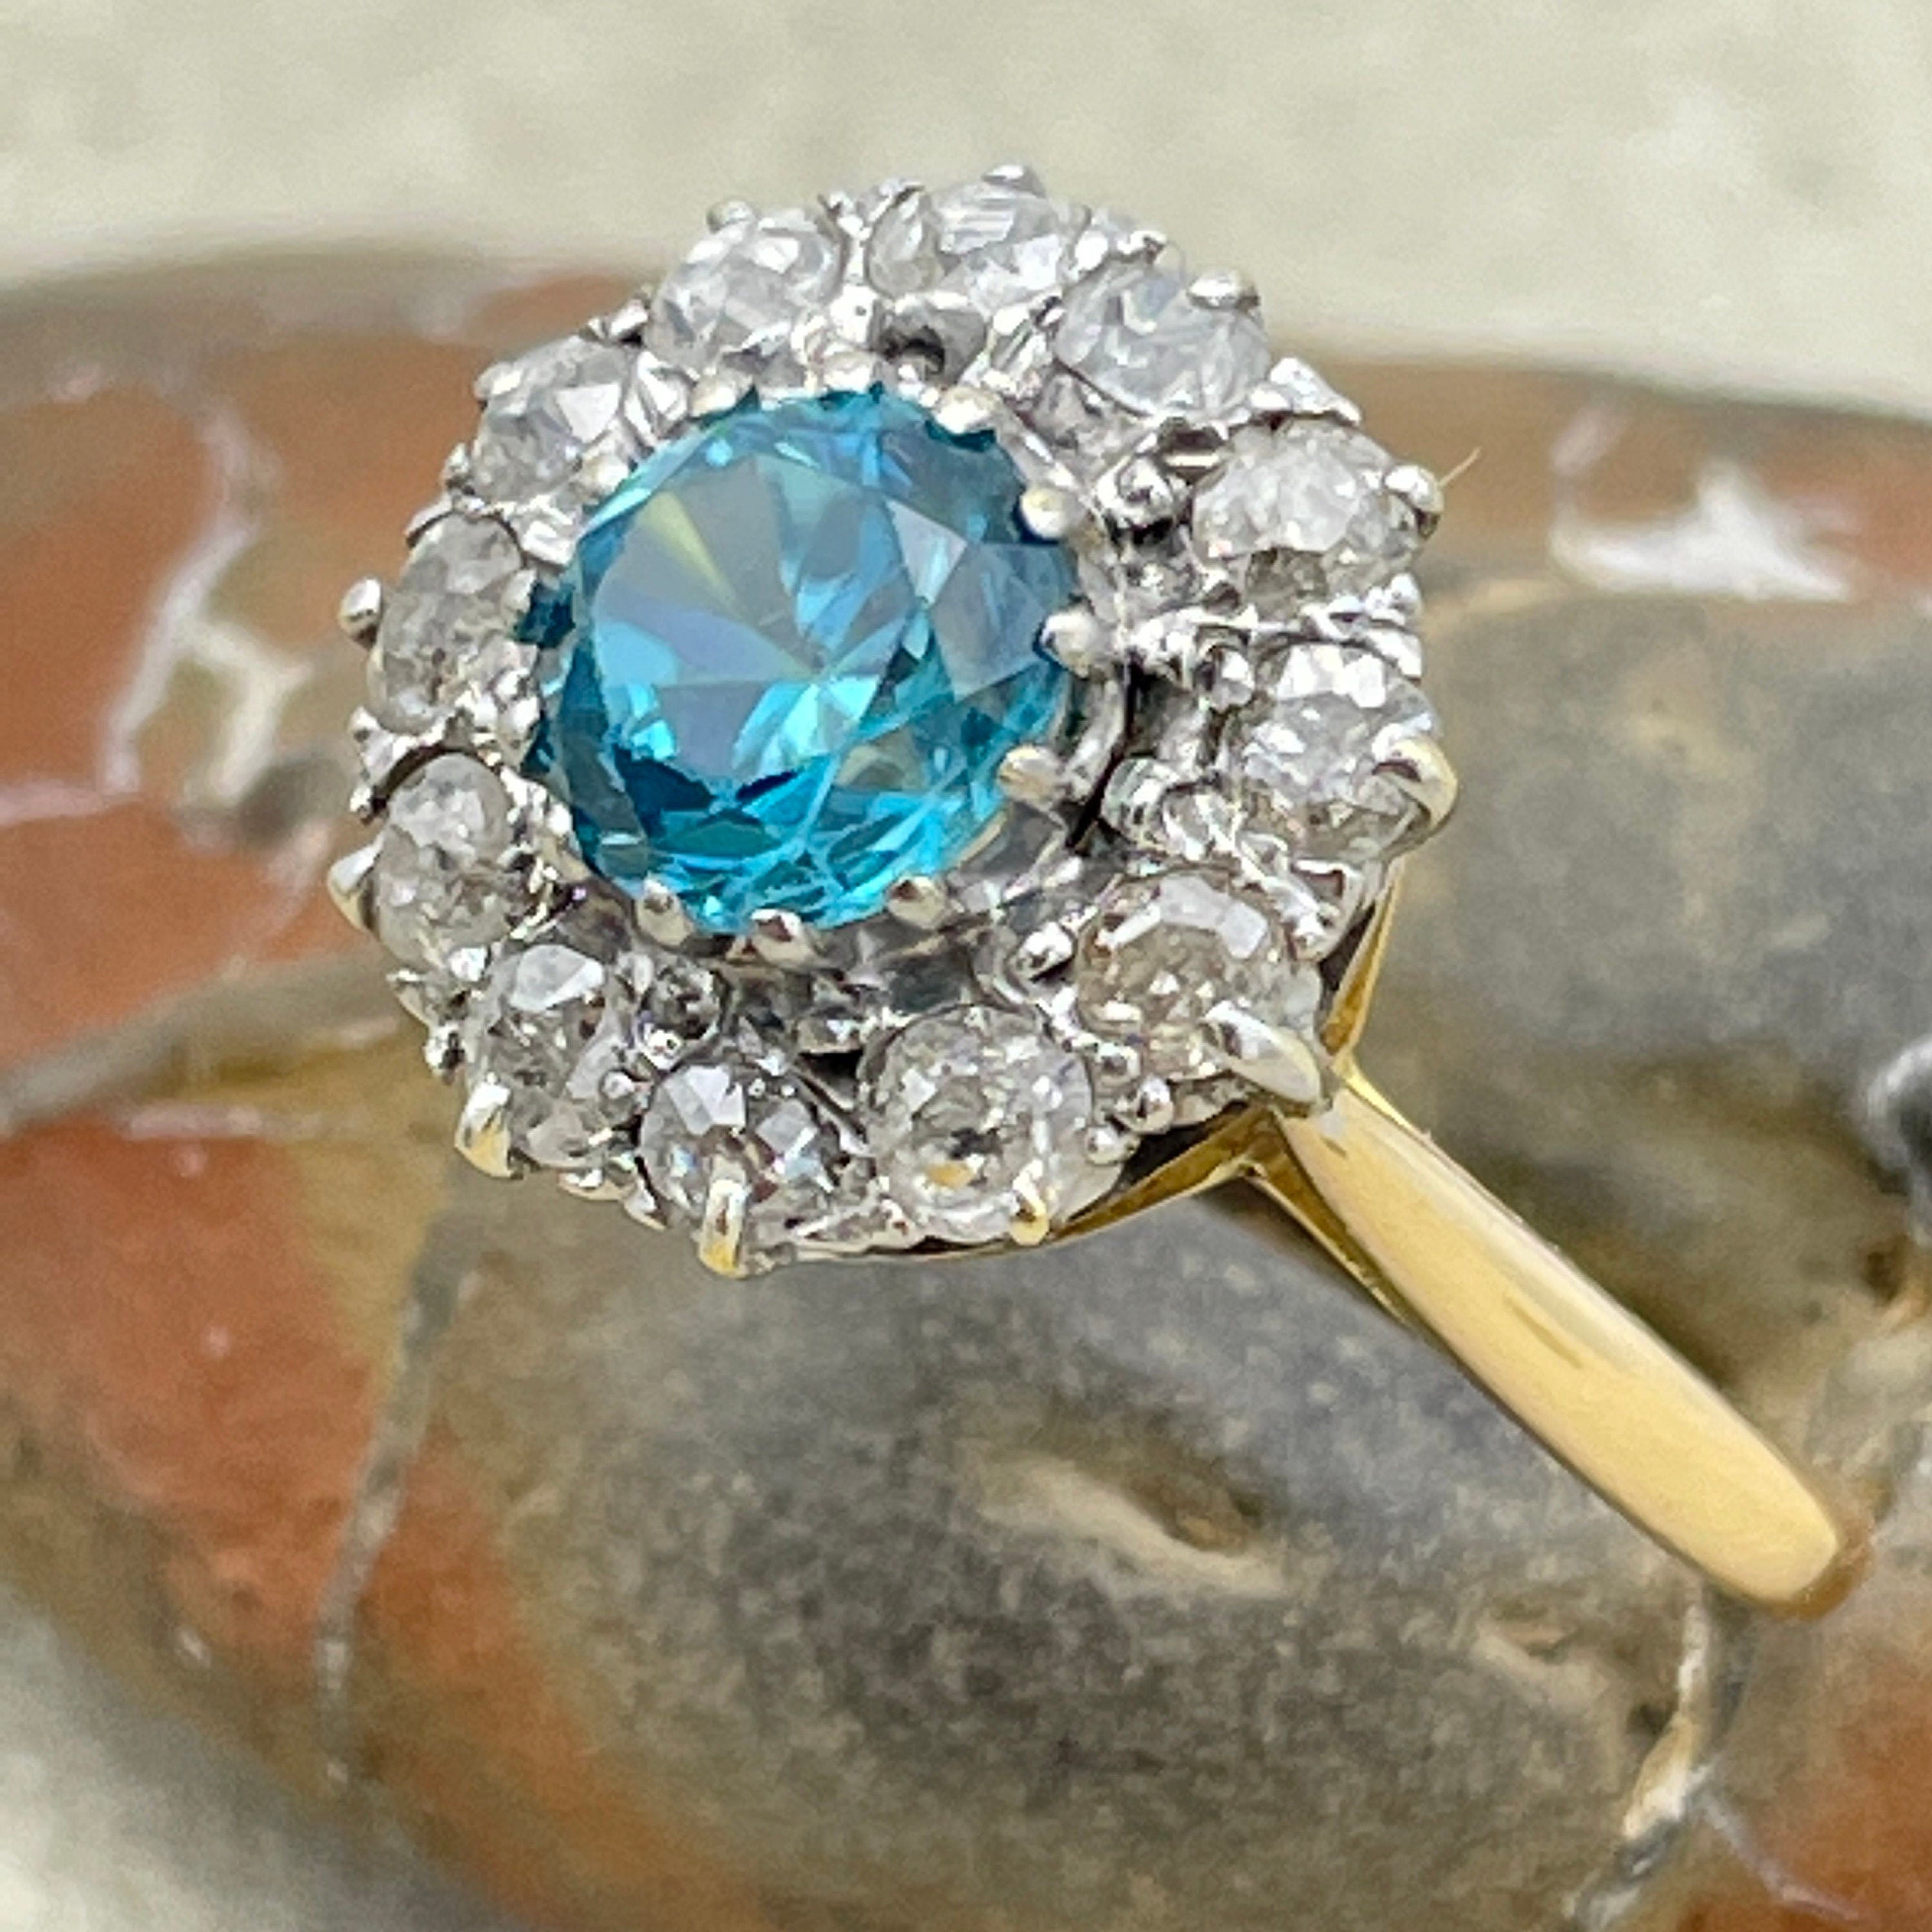 Antique 18ct gold & platinum blue zircon and old cut diamond cluster ring c1910